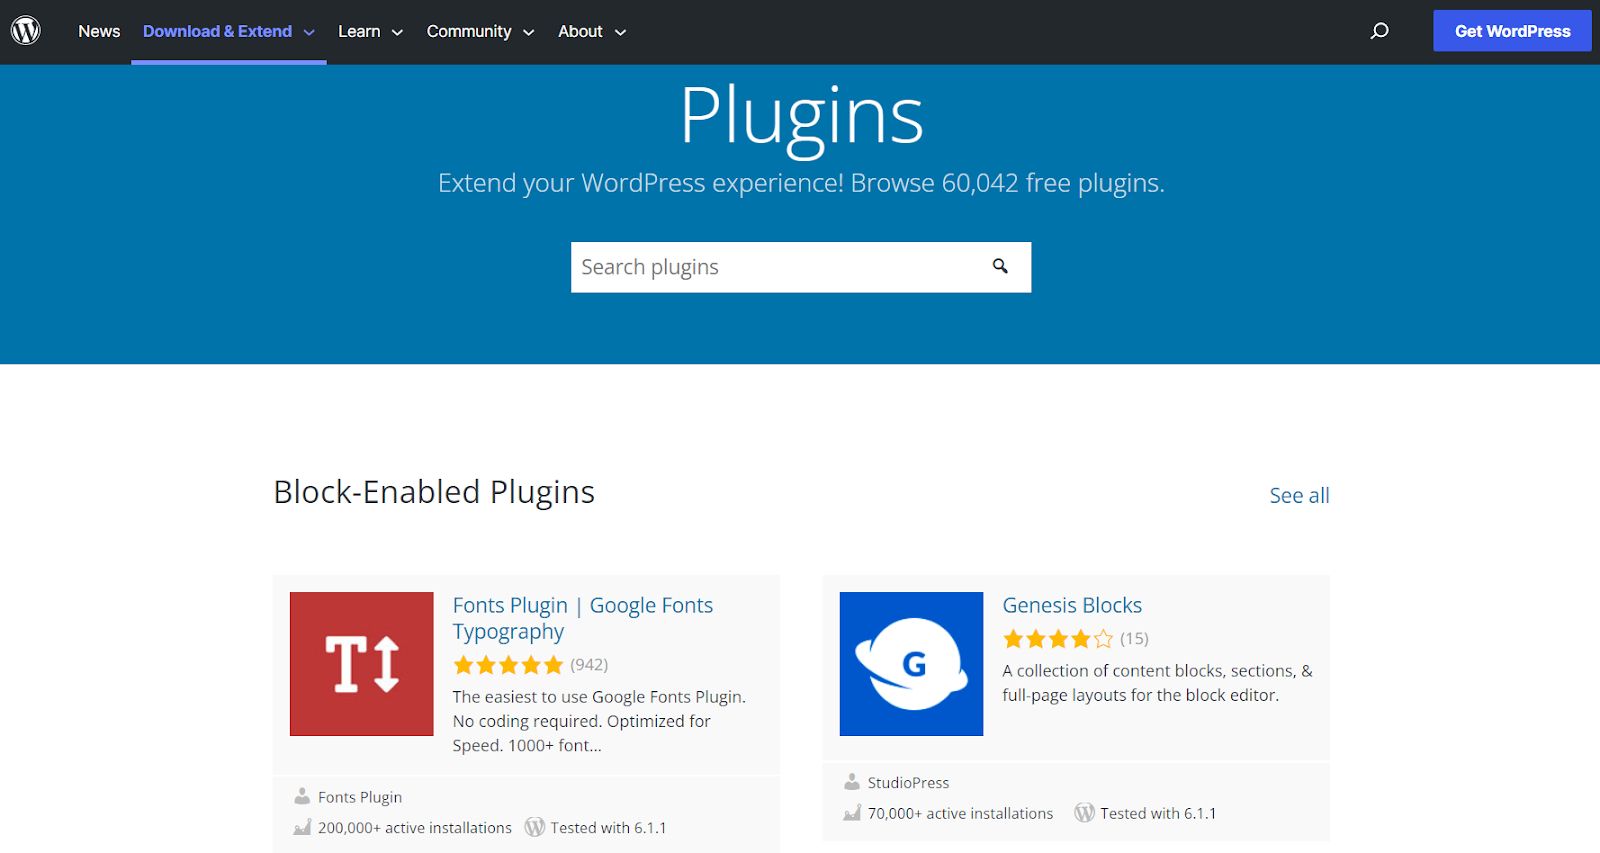 WordPress offers more than 60,000 free plugins. 